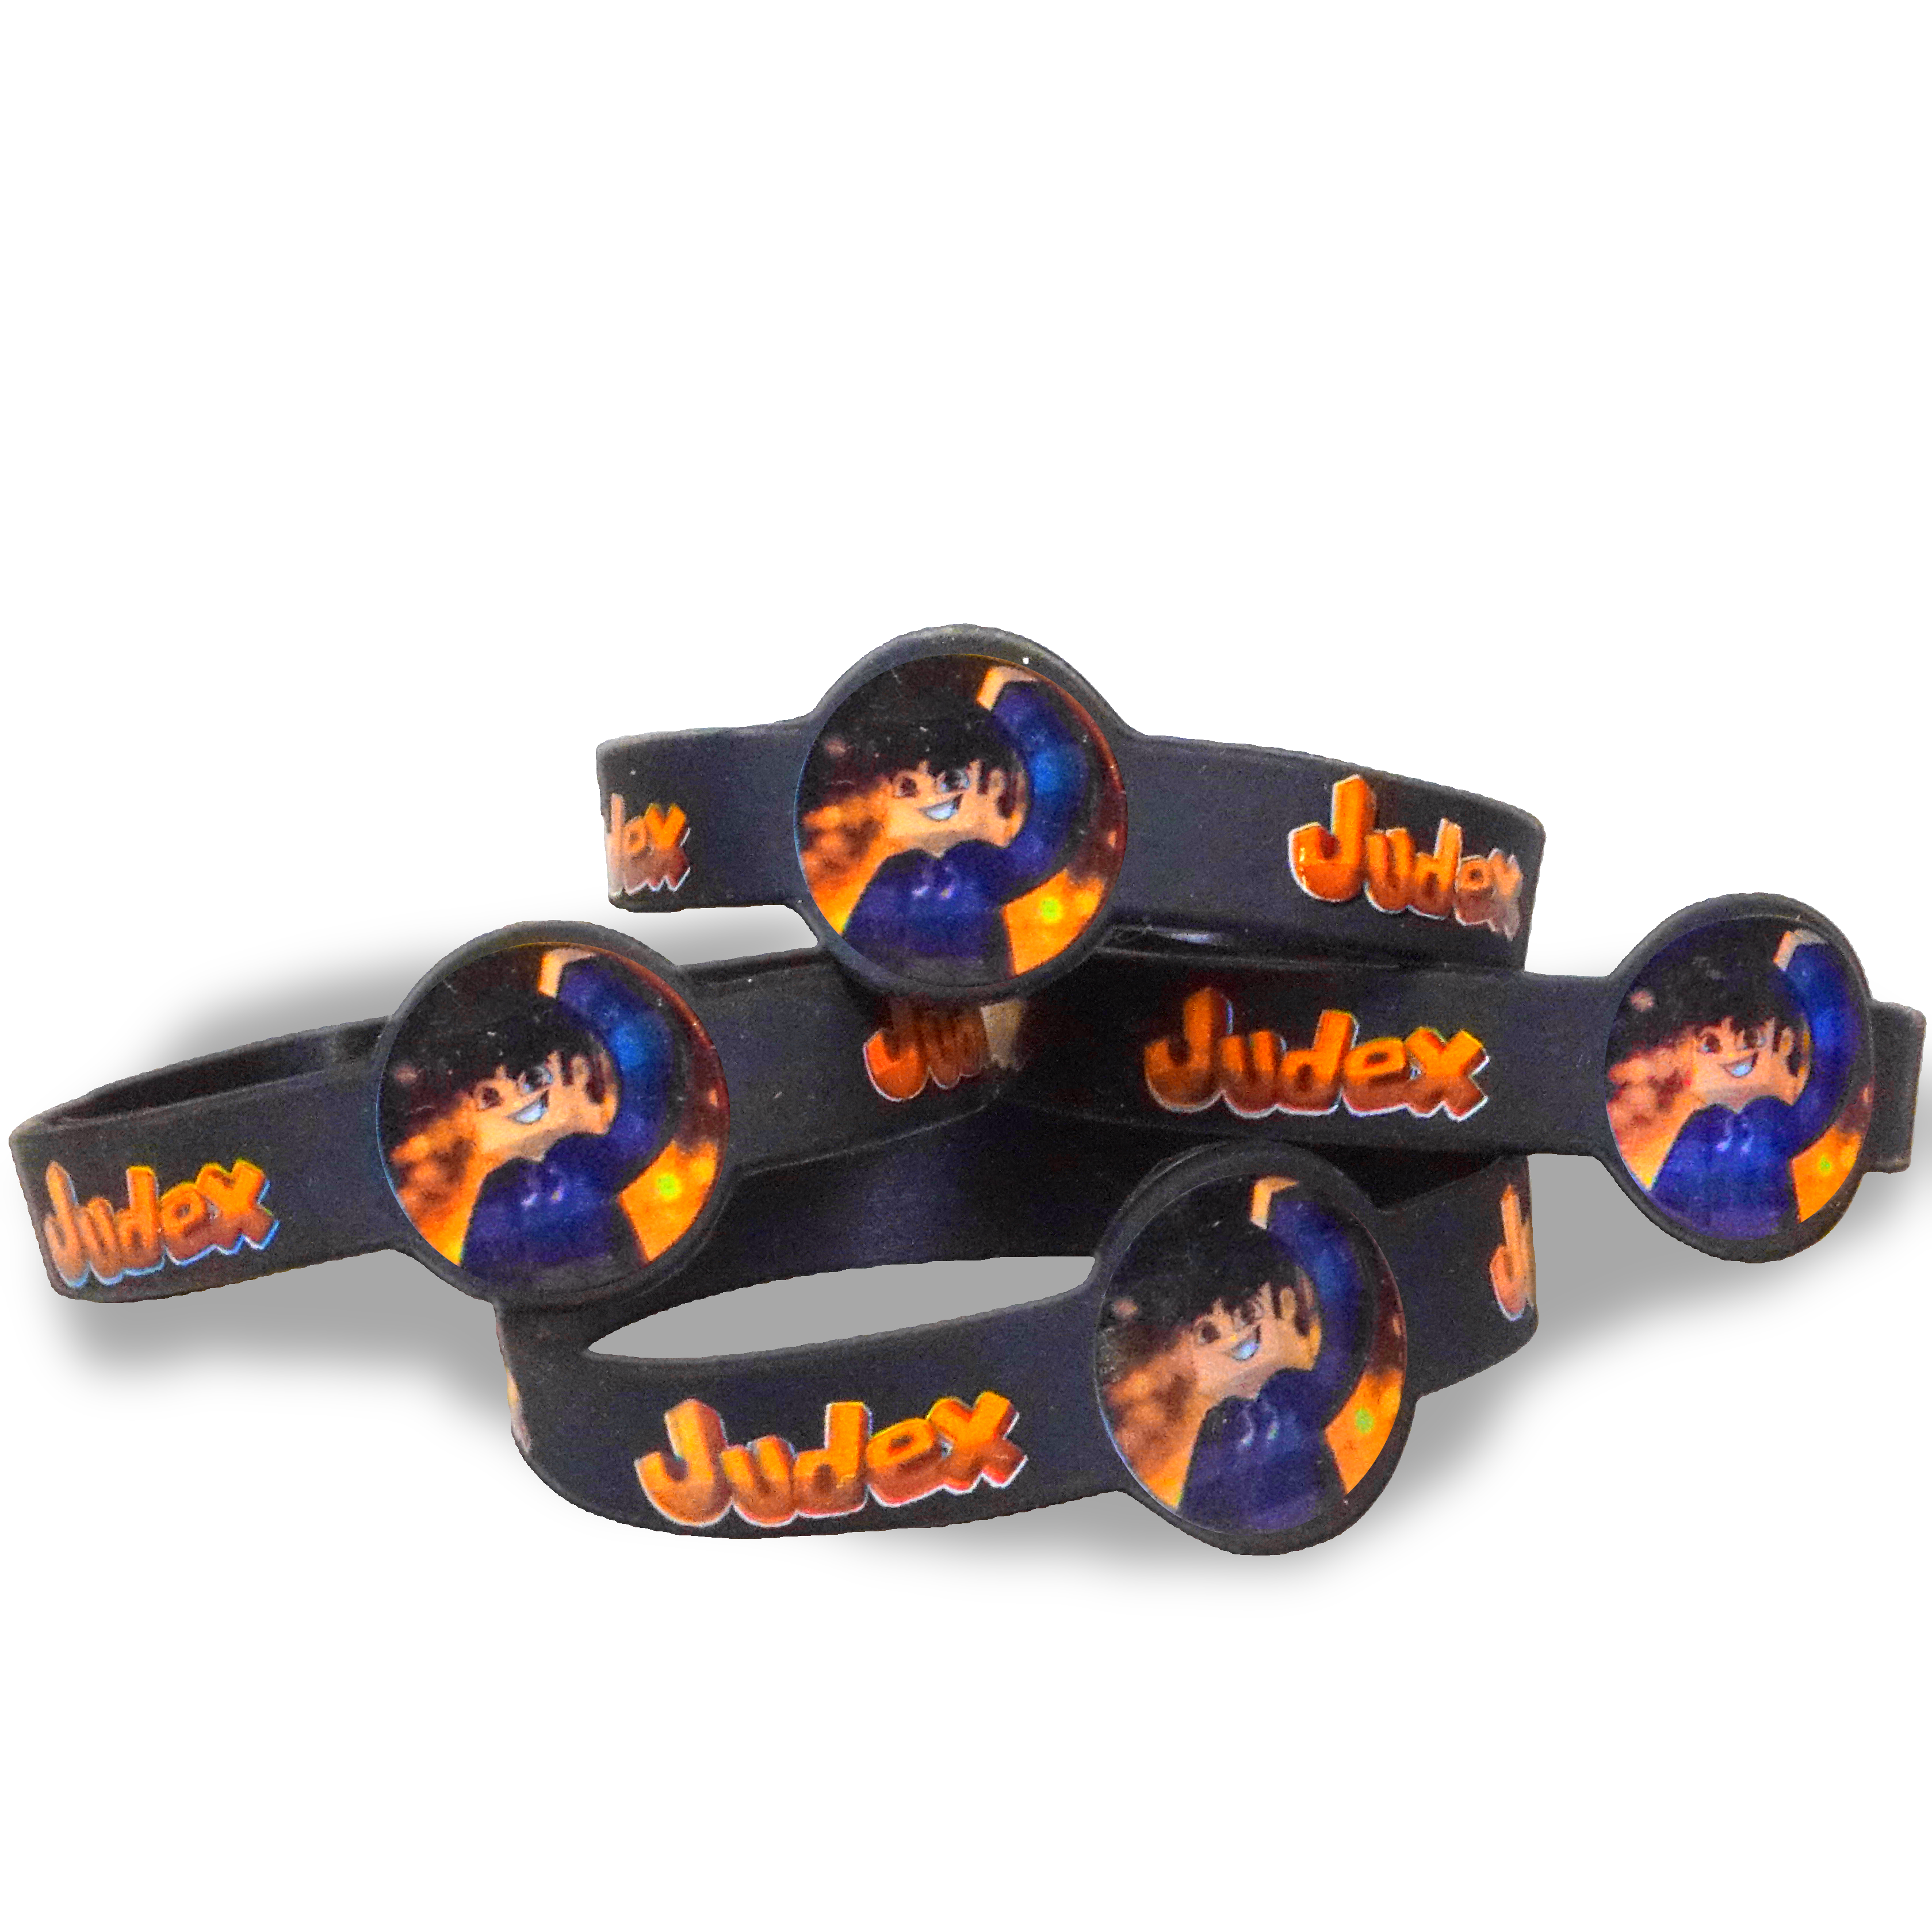 Judex Flame Armband